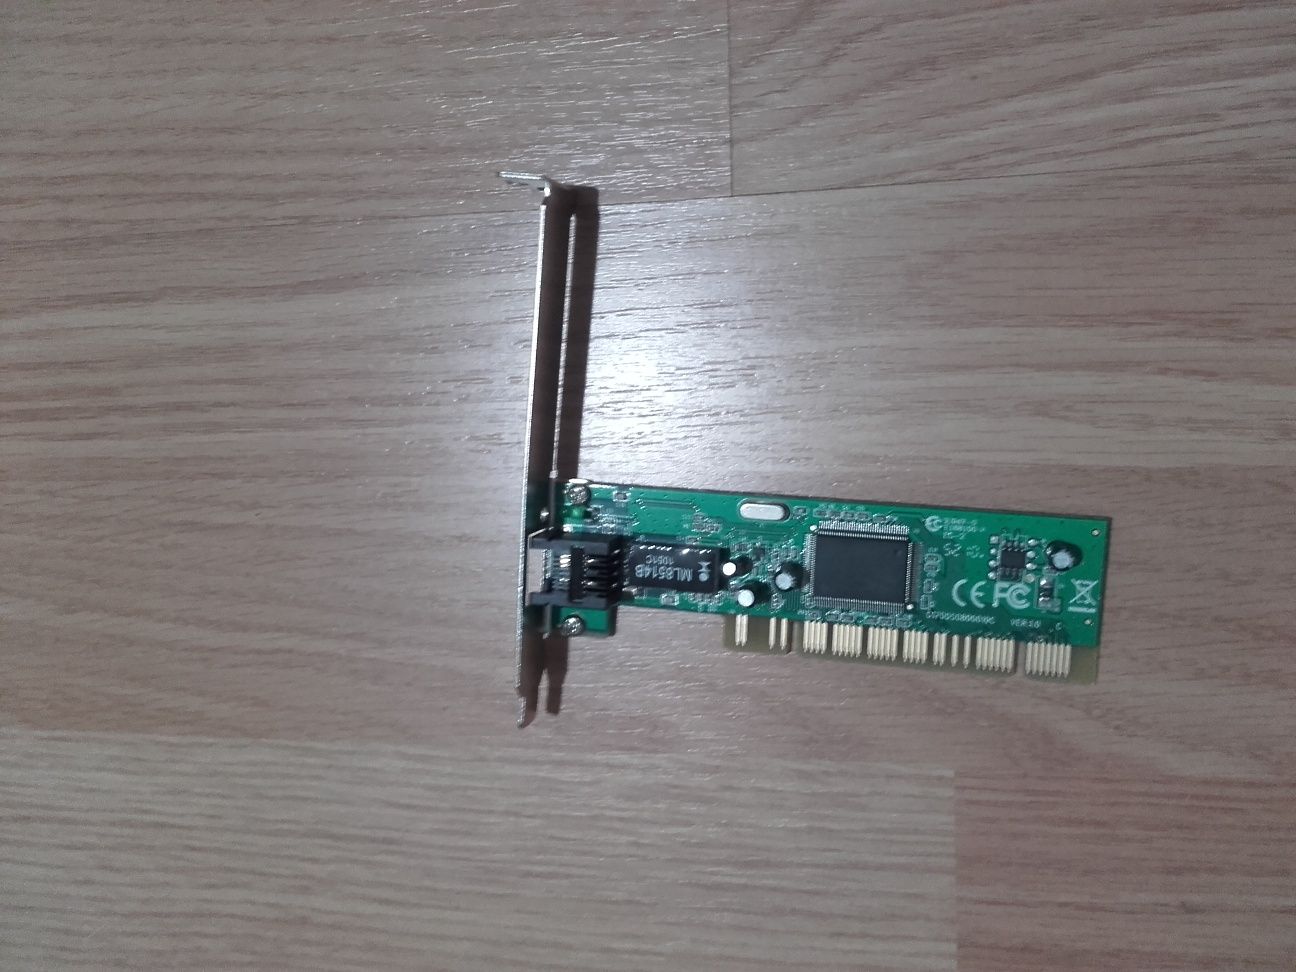 Karta sieciowa ASUS NX1001 Network PCI Adapter